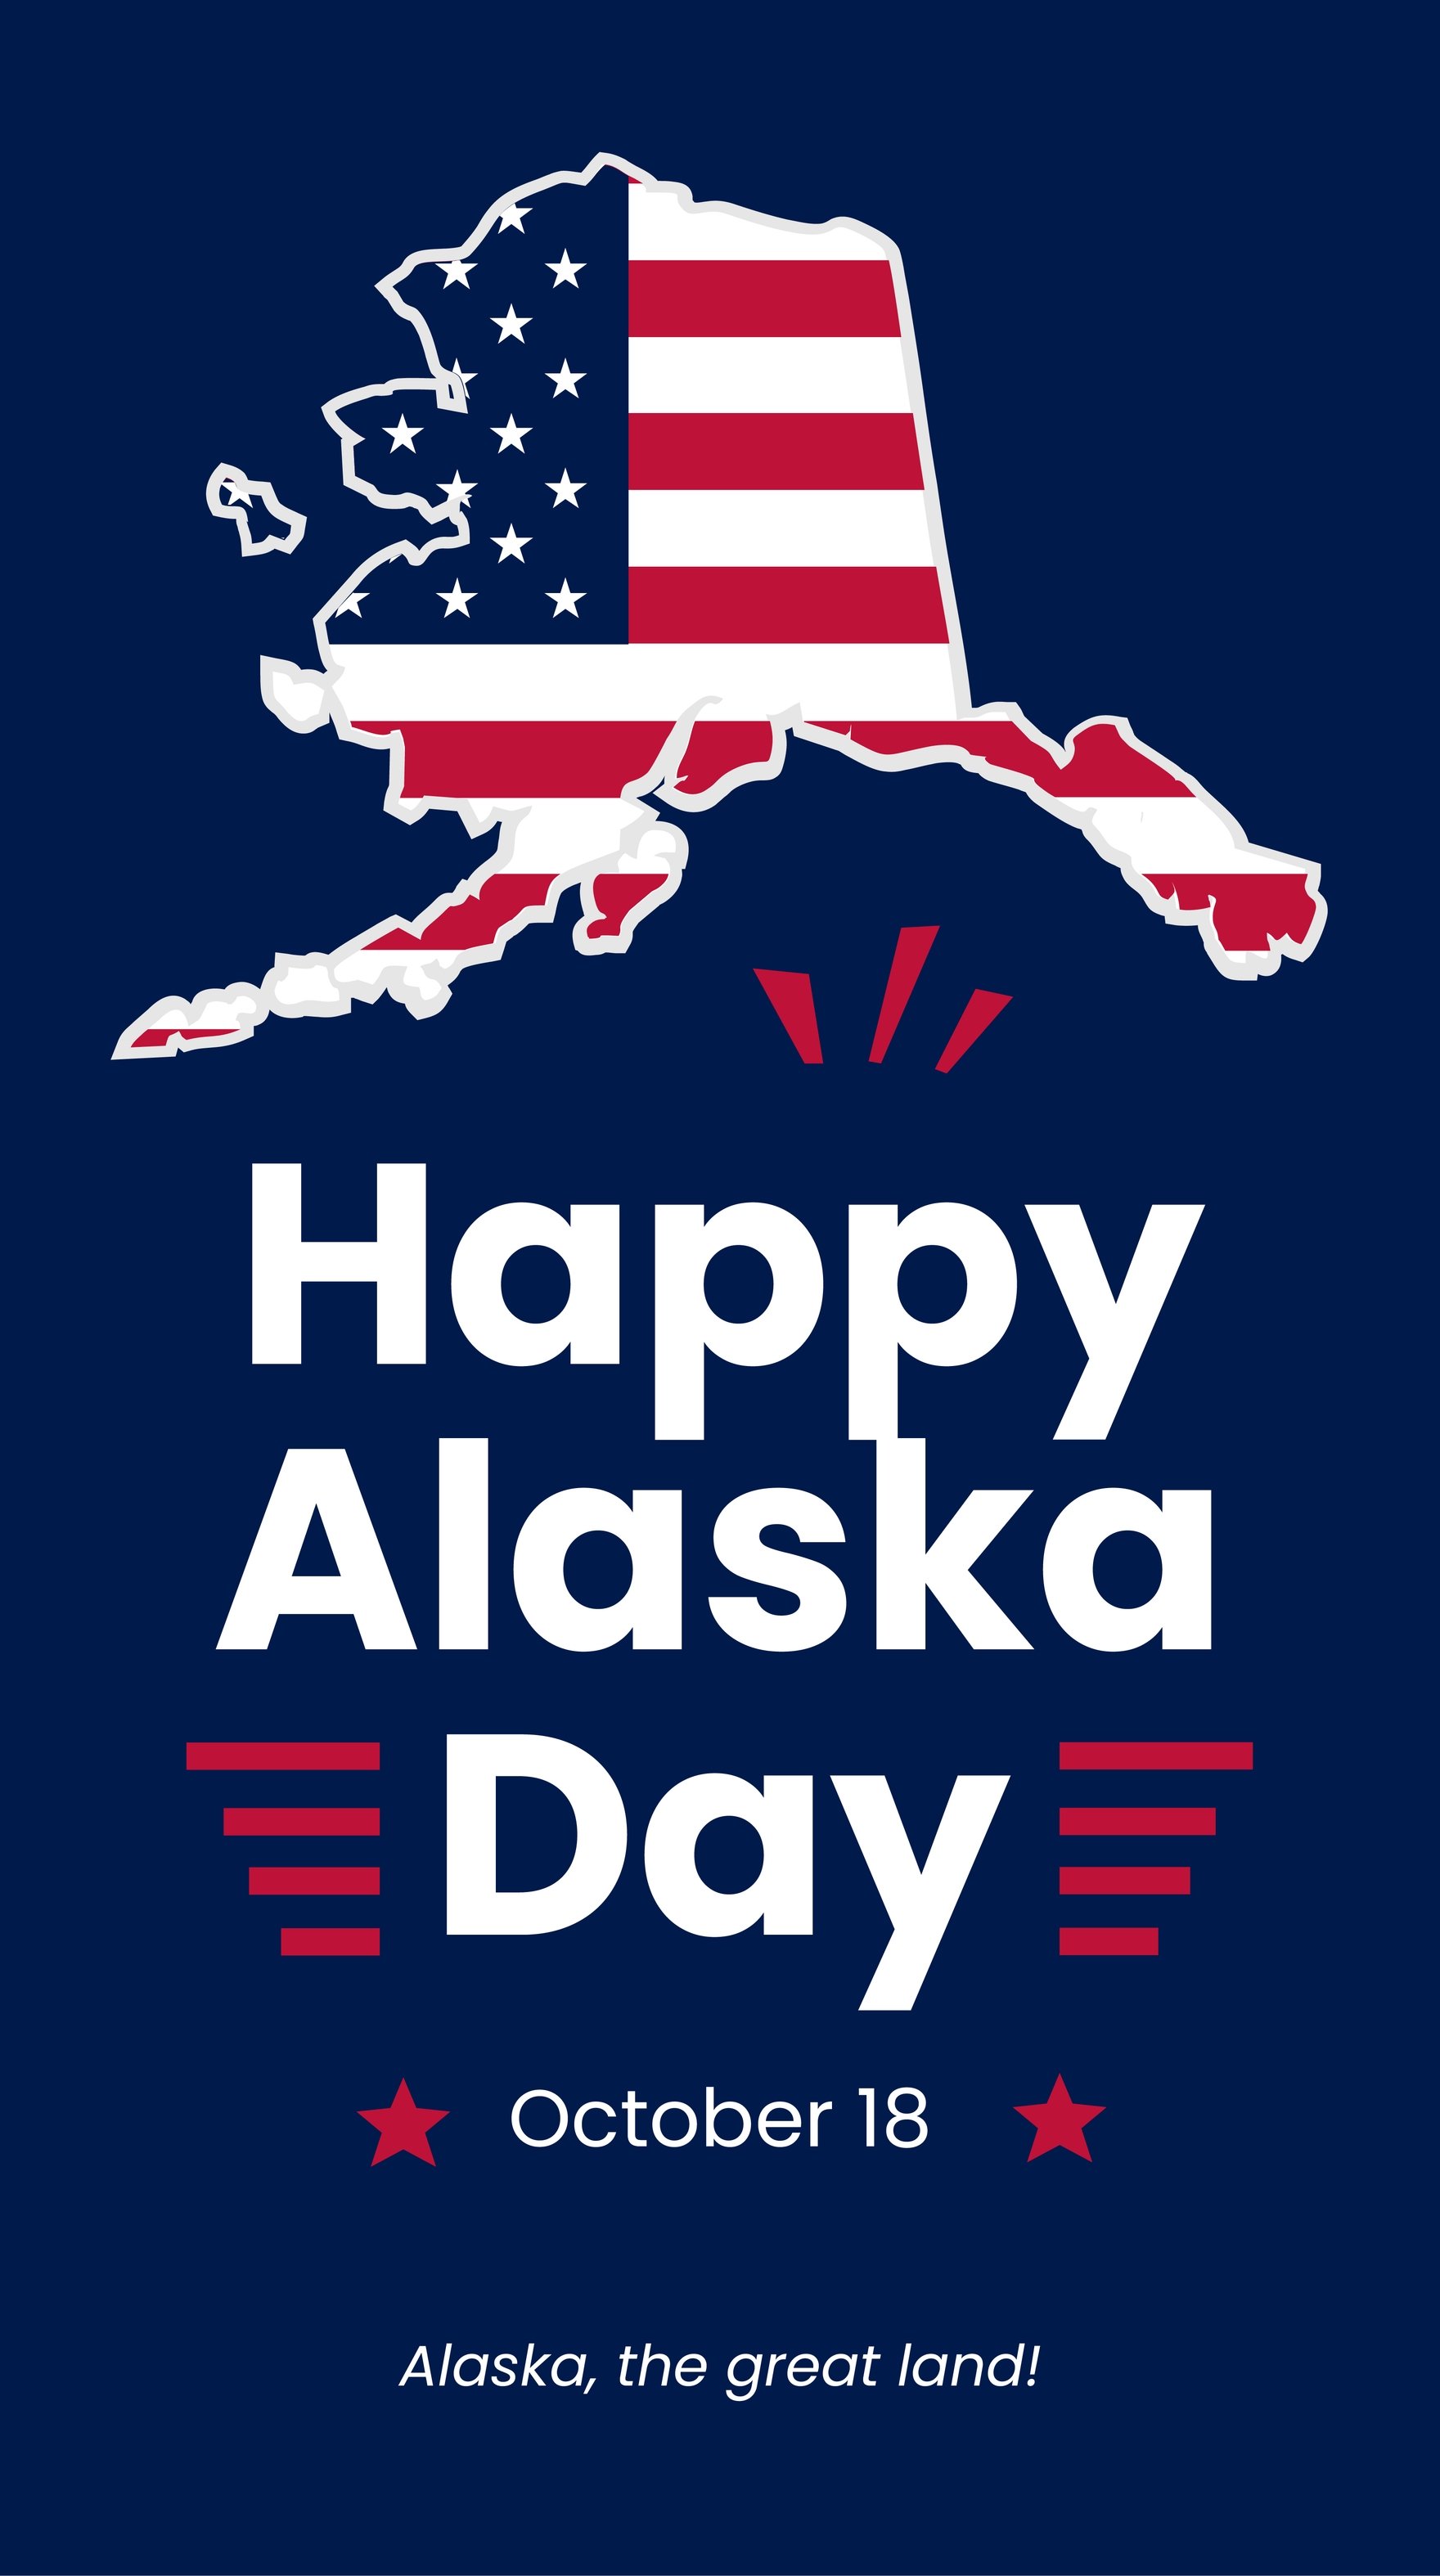 Alaska Day Whatsapp Post in Illustrator, PSD, EPS, SVG, JPG, PNG